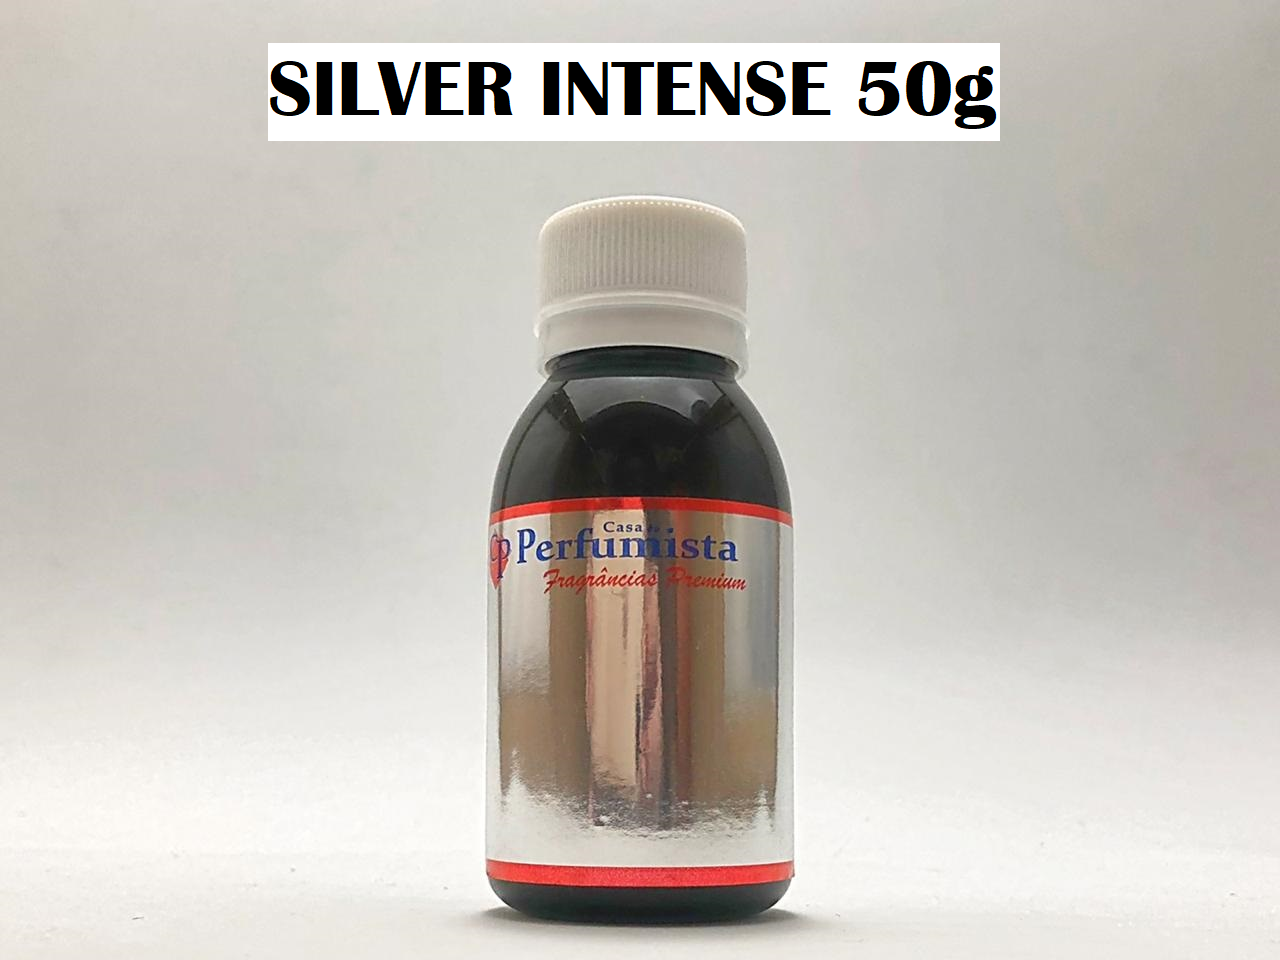 SILVER INTENSE 50g - Inspiração: Silver Scent Intense